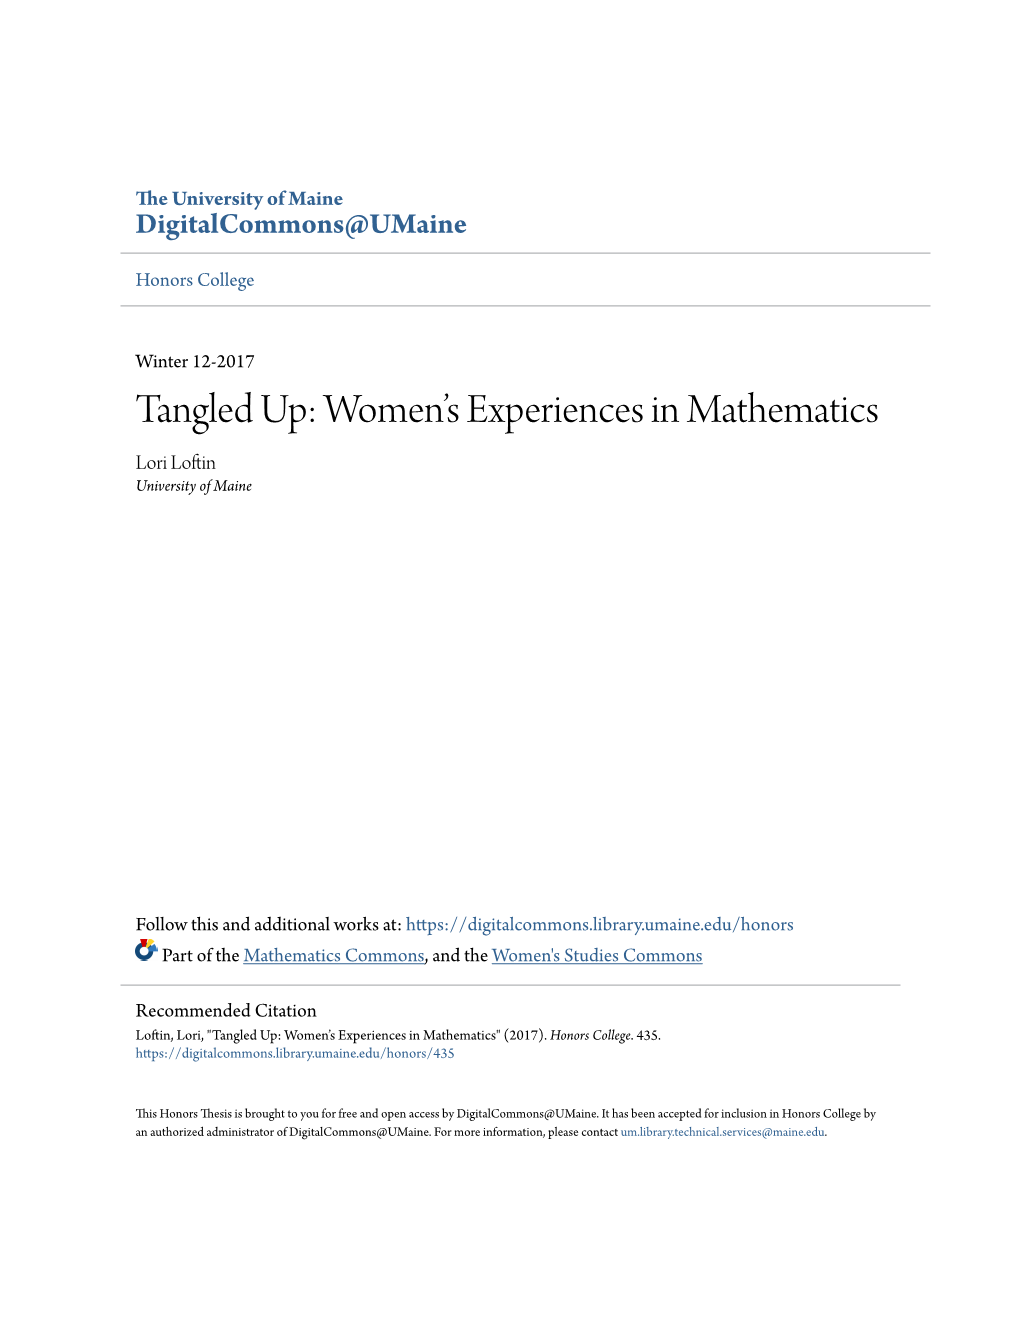 Women's Experiences in Mathematics